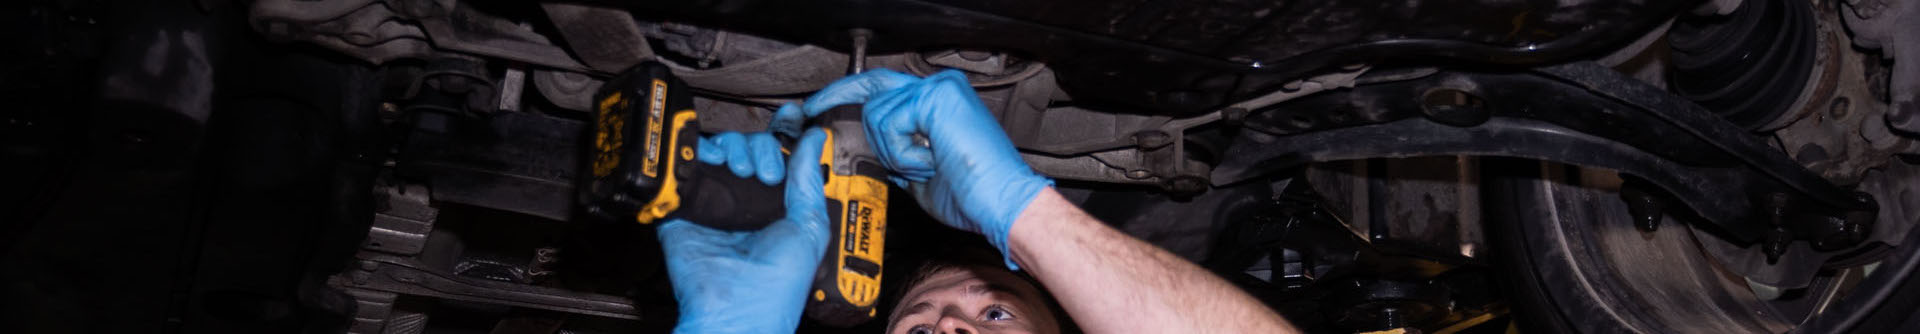 https://autotechrecruit.co.uk/wp-content/uploads/2019/07/Autotech-Recruit-Technicial-repairing-car.jpg